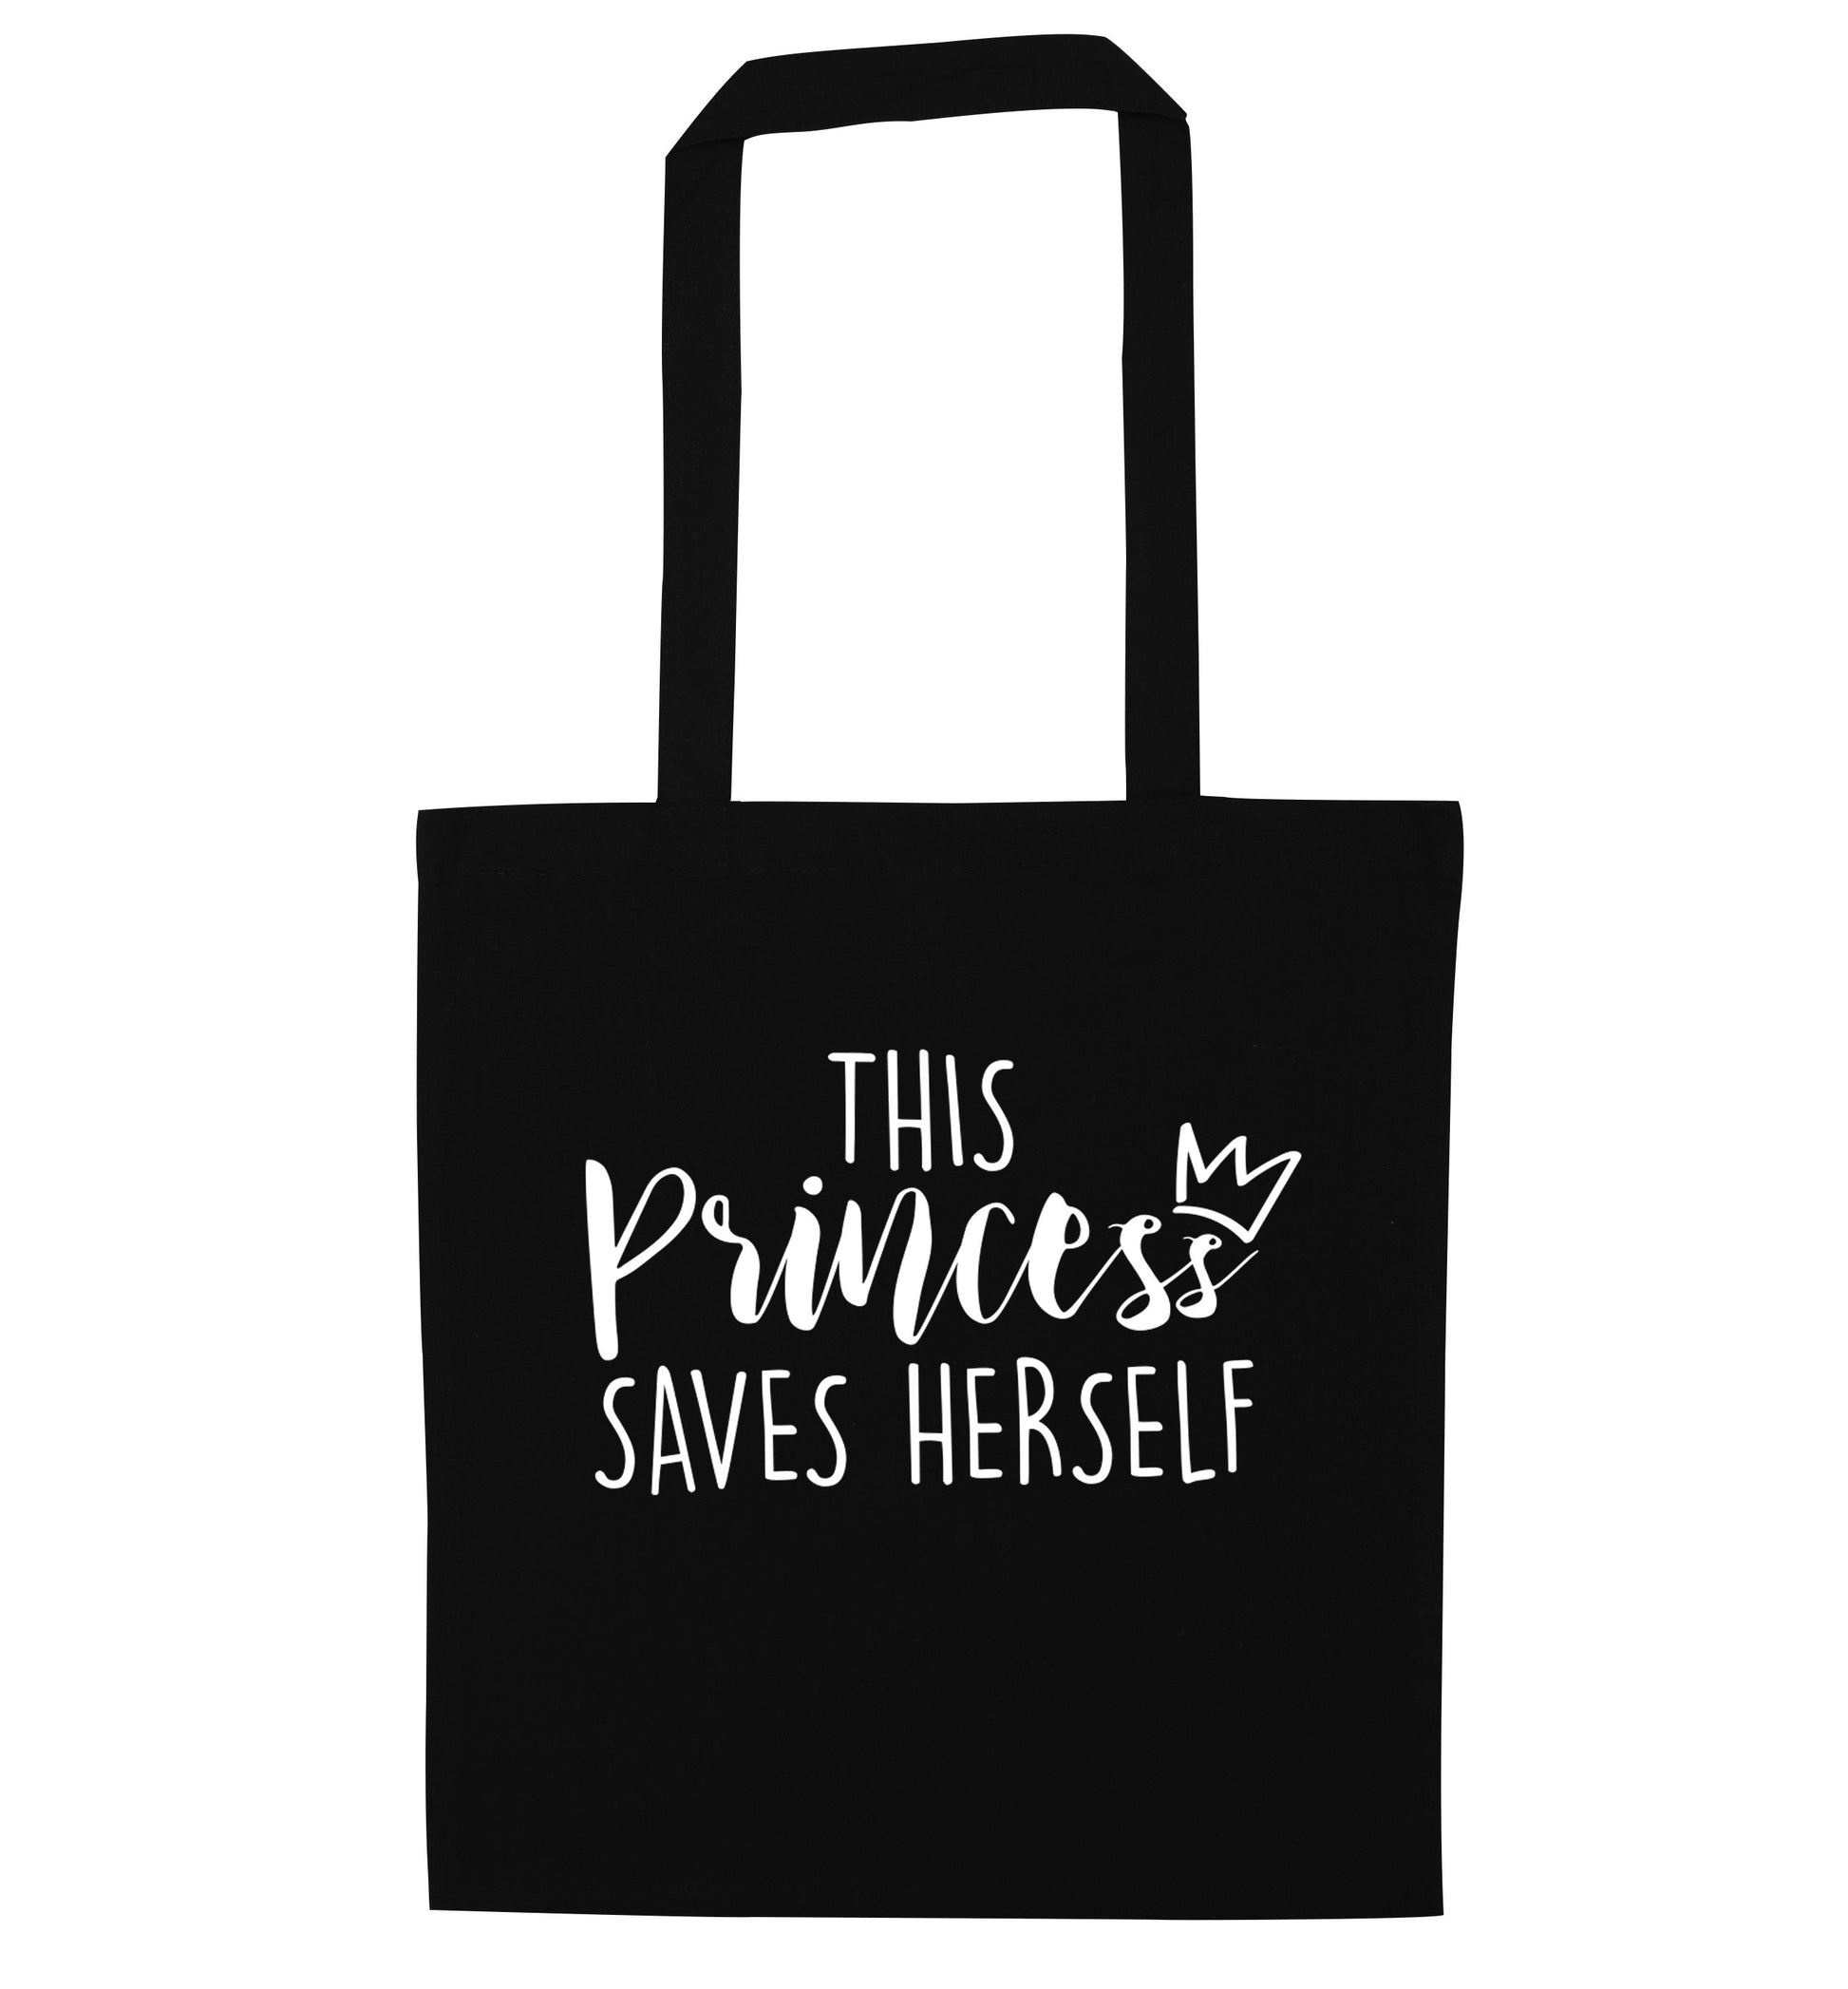 This princess saves herself black tote bag